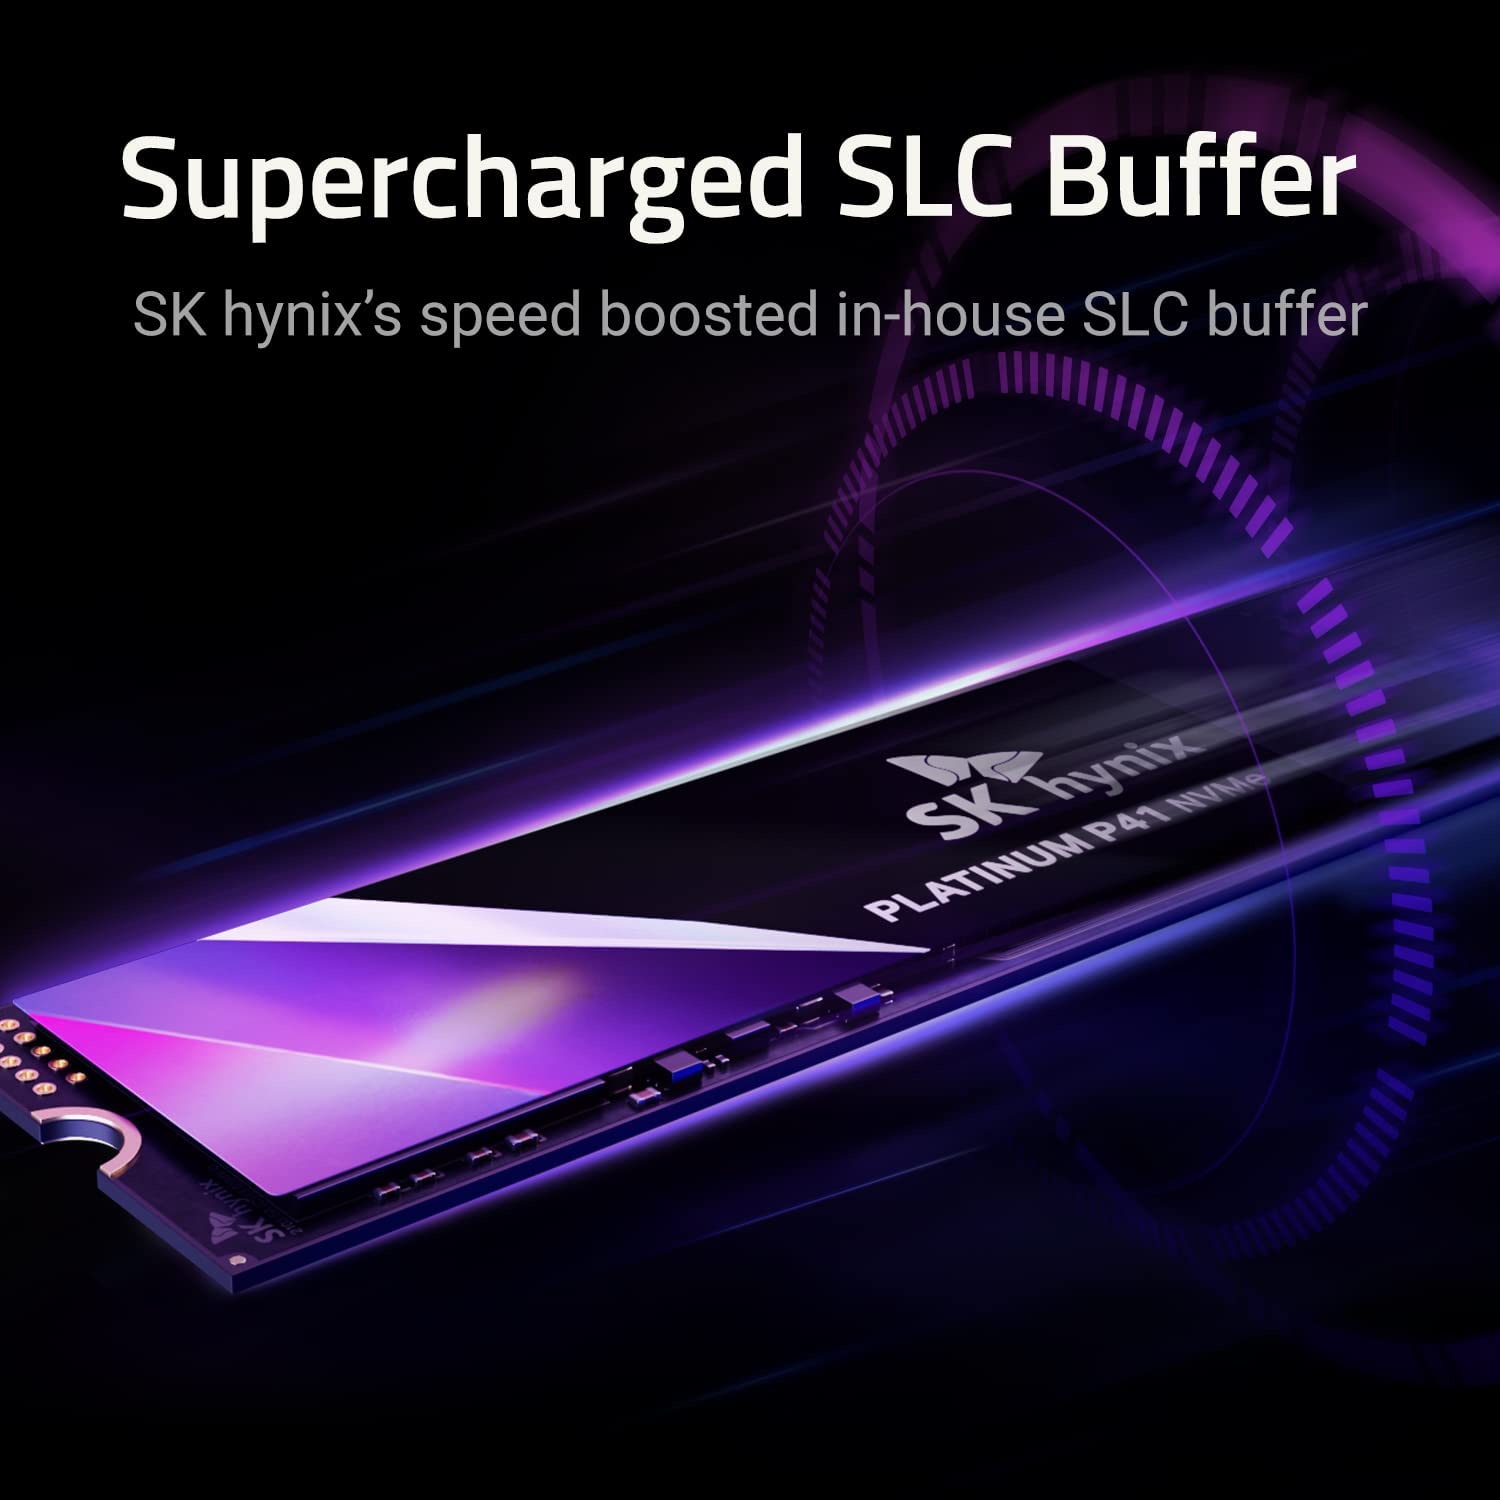 SK Hynix Platinum P41 1TB PCIe NVMe Gen4 M.2 2280 SSD (7000MB/s)